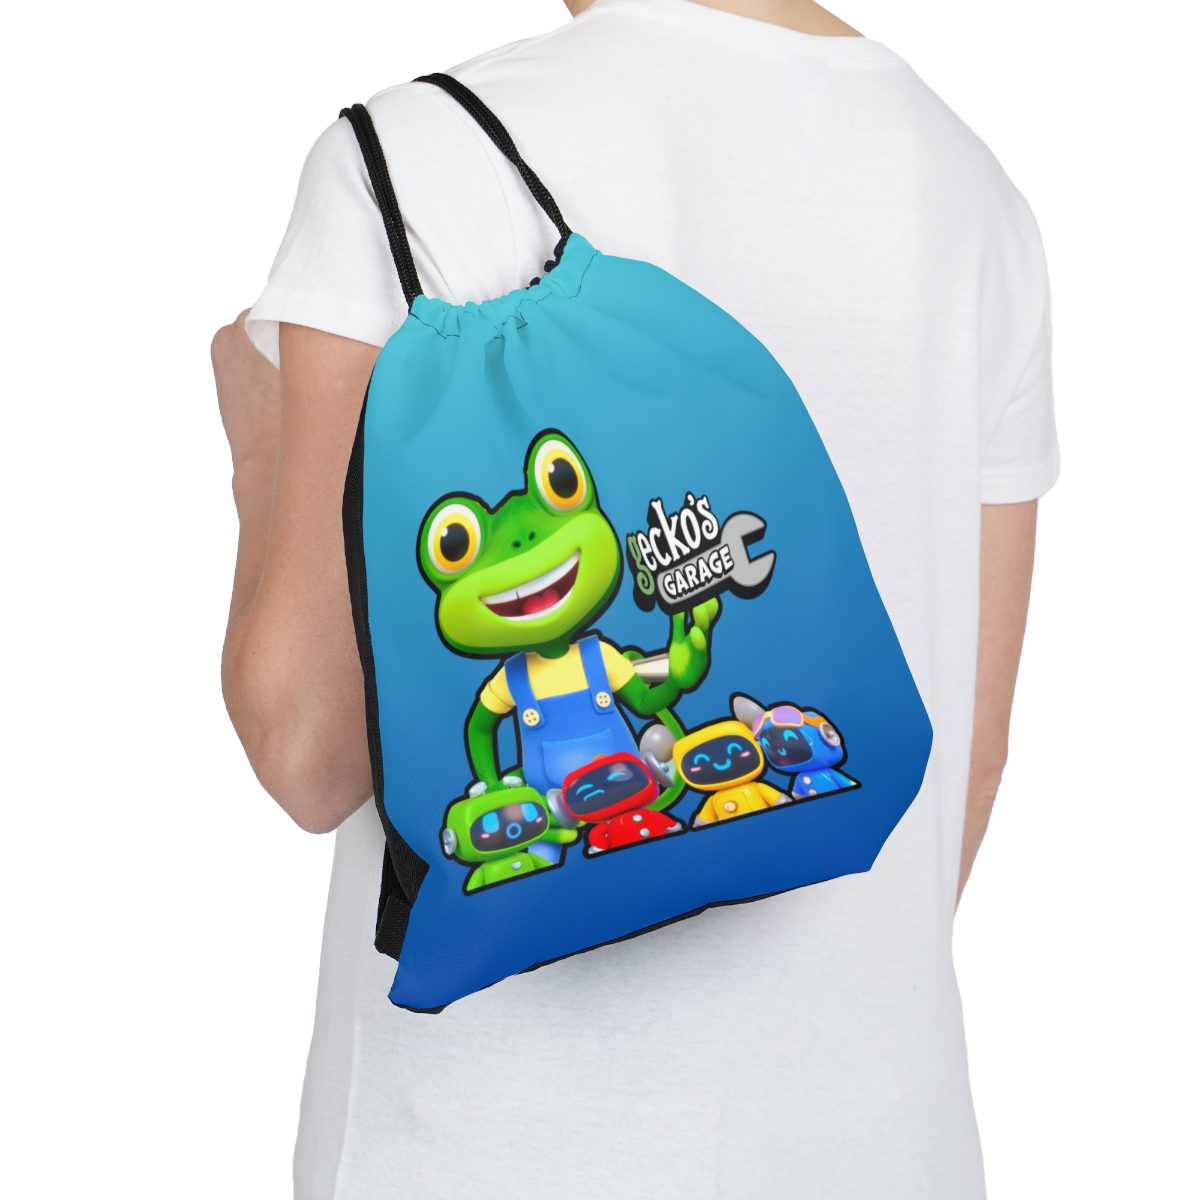 Blue Gecko’s Garage Outdoor Drawstring Bag Cool Kiddo 18